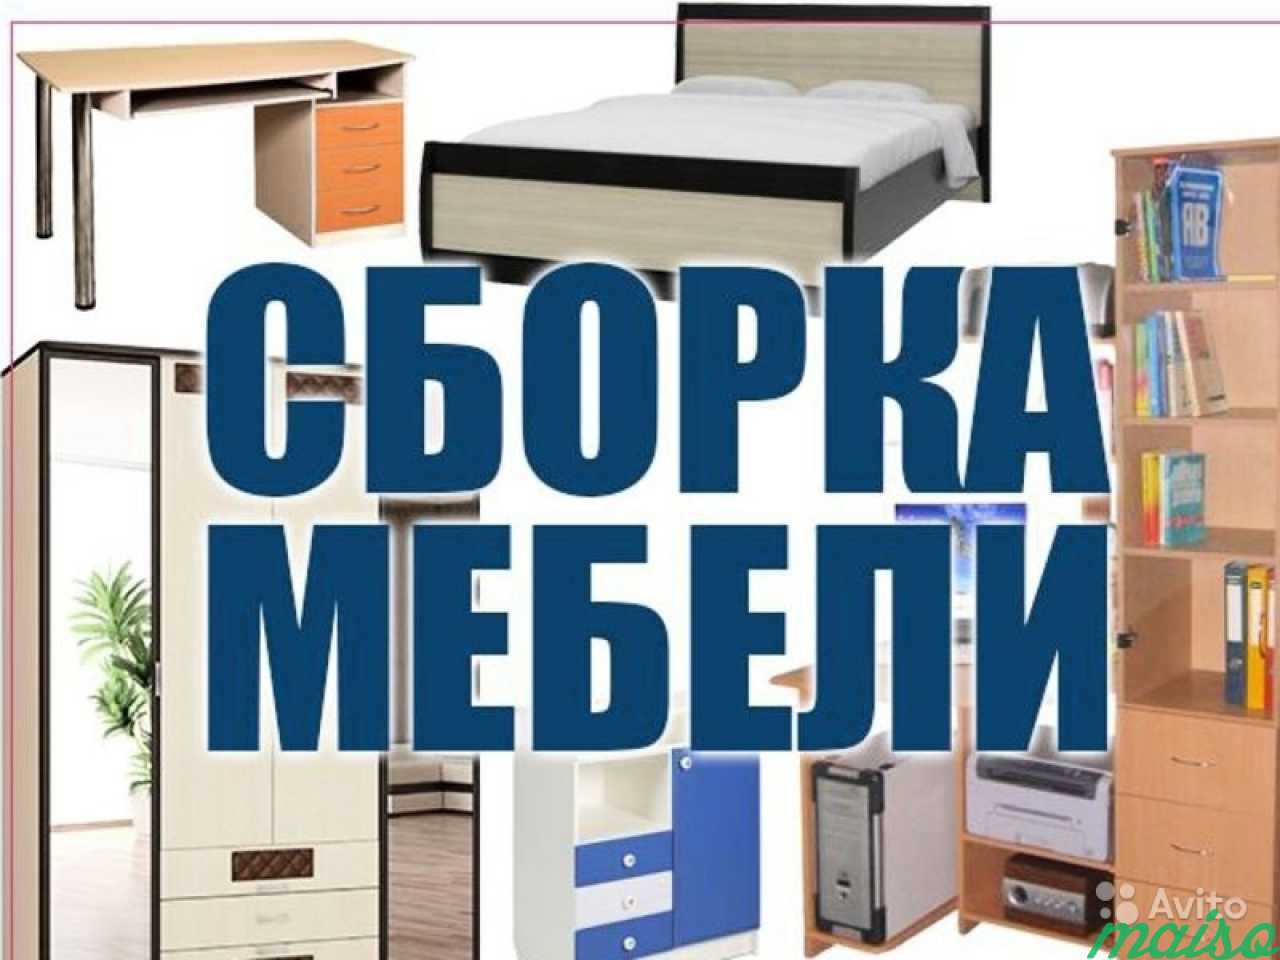 сборщик мебели южно сахалинск